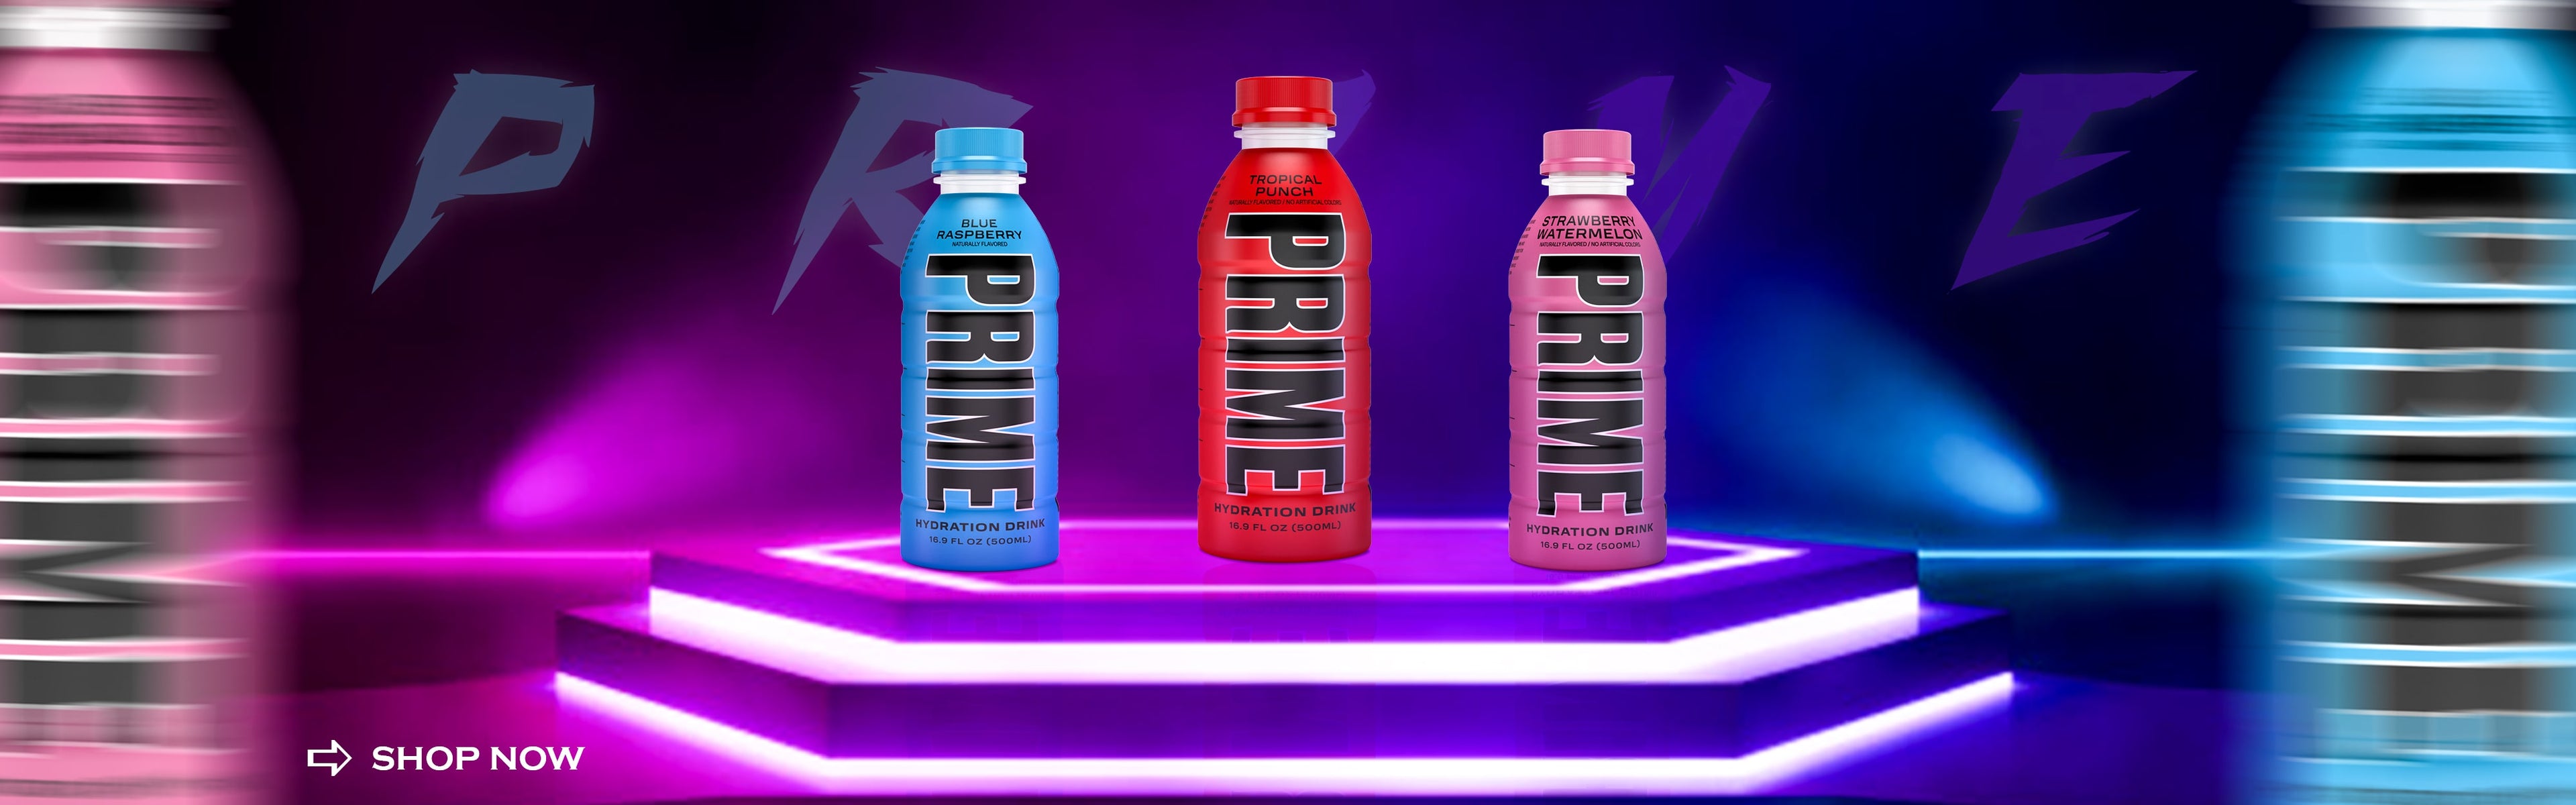 PRIME Hydration Drink by KSI & Logan Paul 500ml X 3